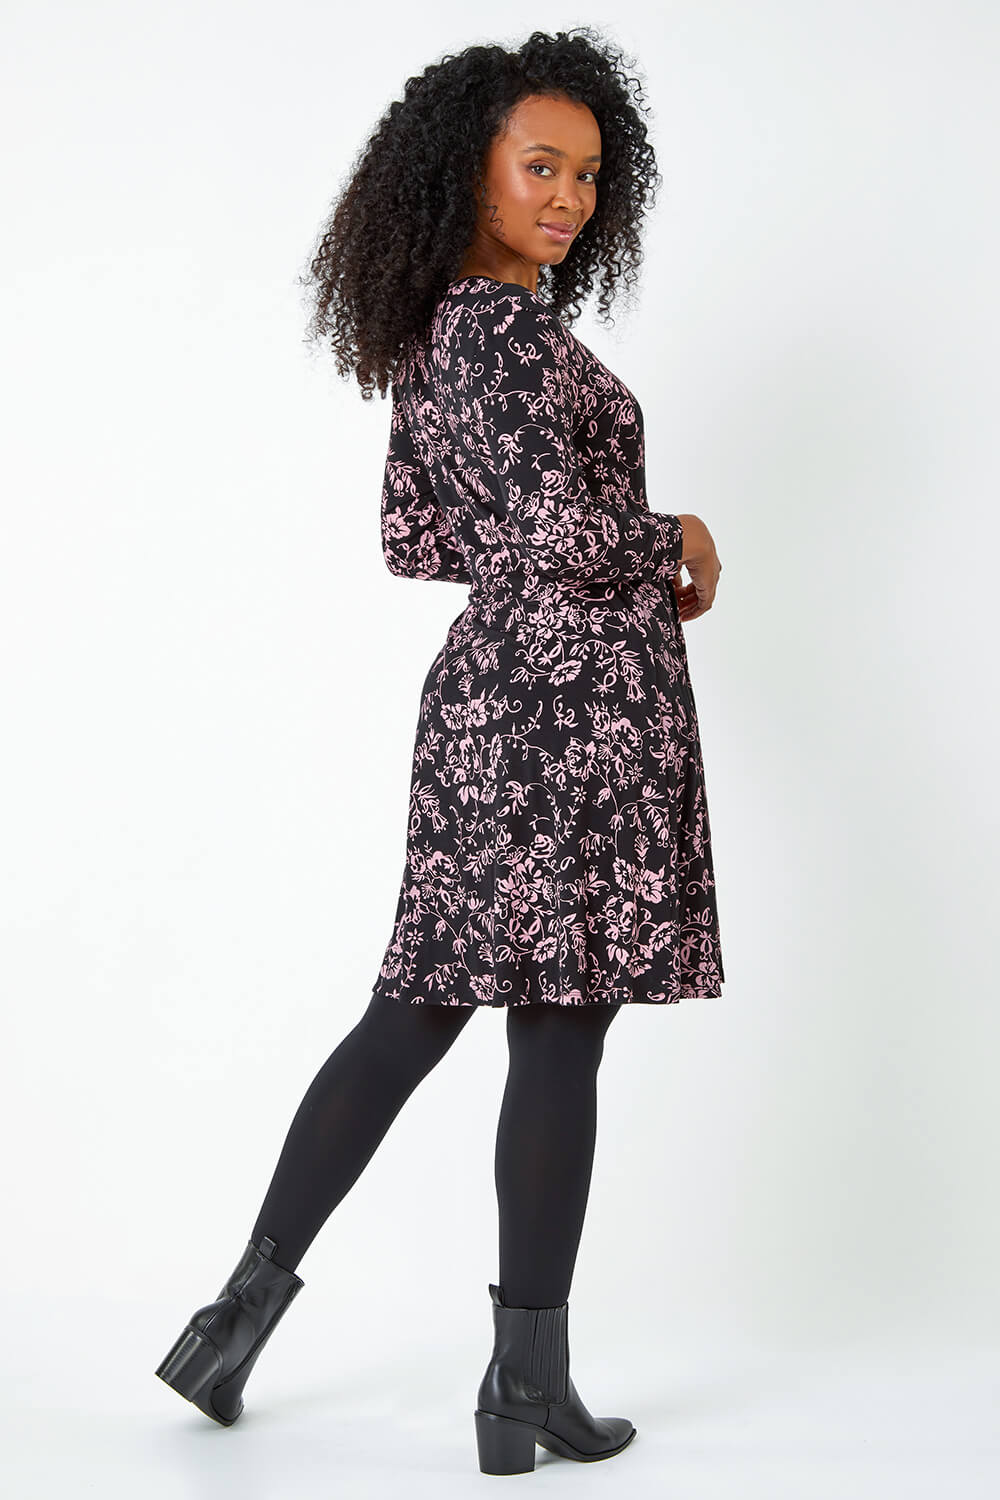 Black Petite Floral Mock Wrap Stretch Dress, Image 3 of 5